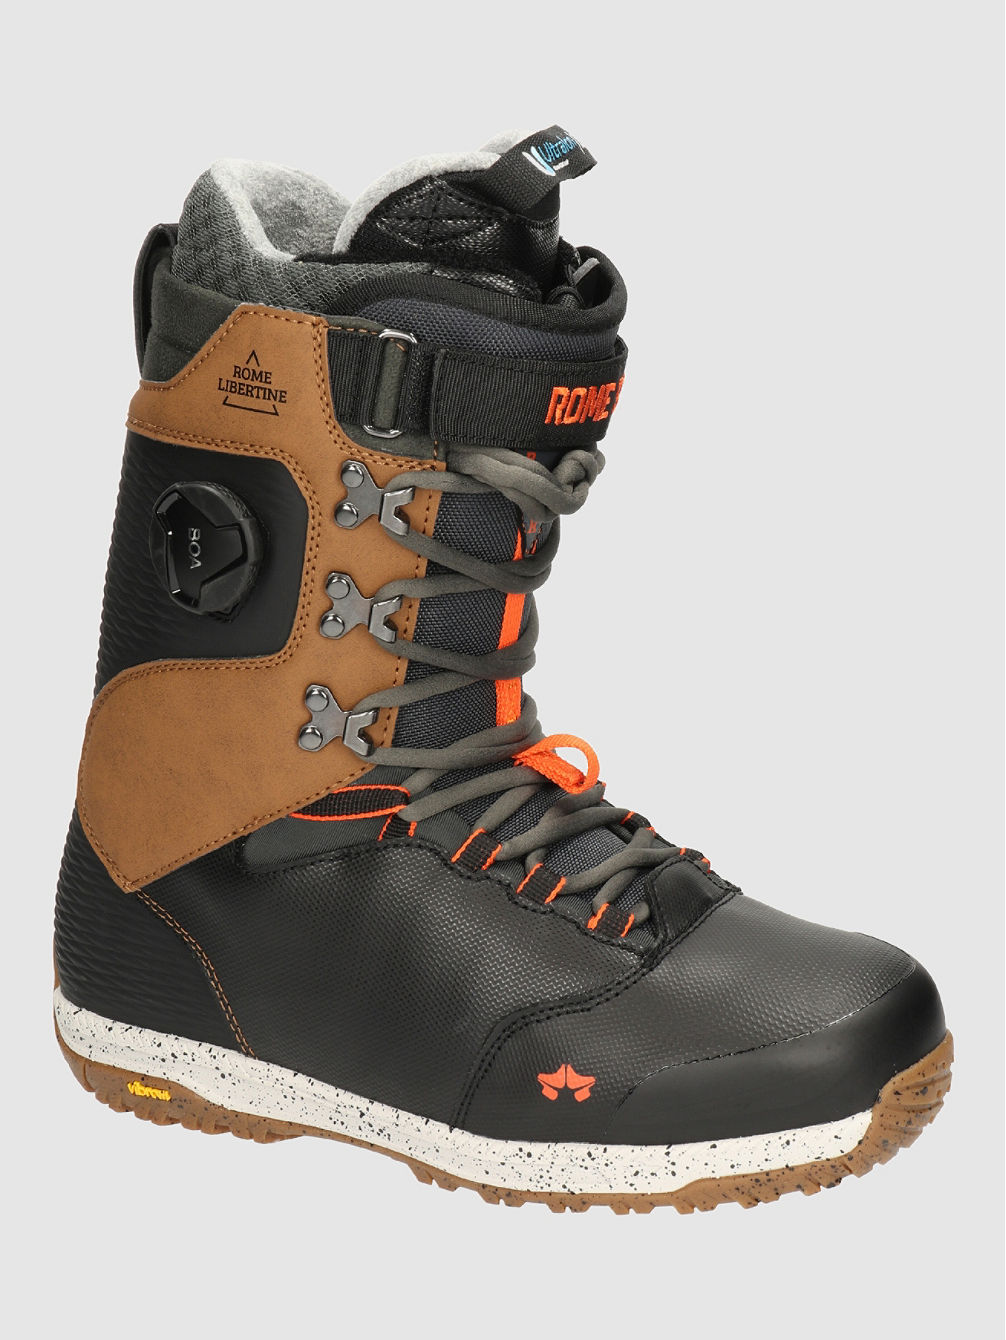 Libertine Hybrid Boa 2022 Snowboard Boots